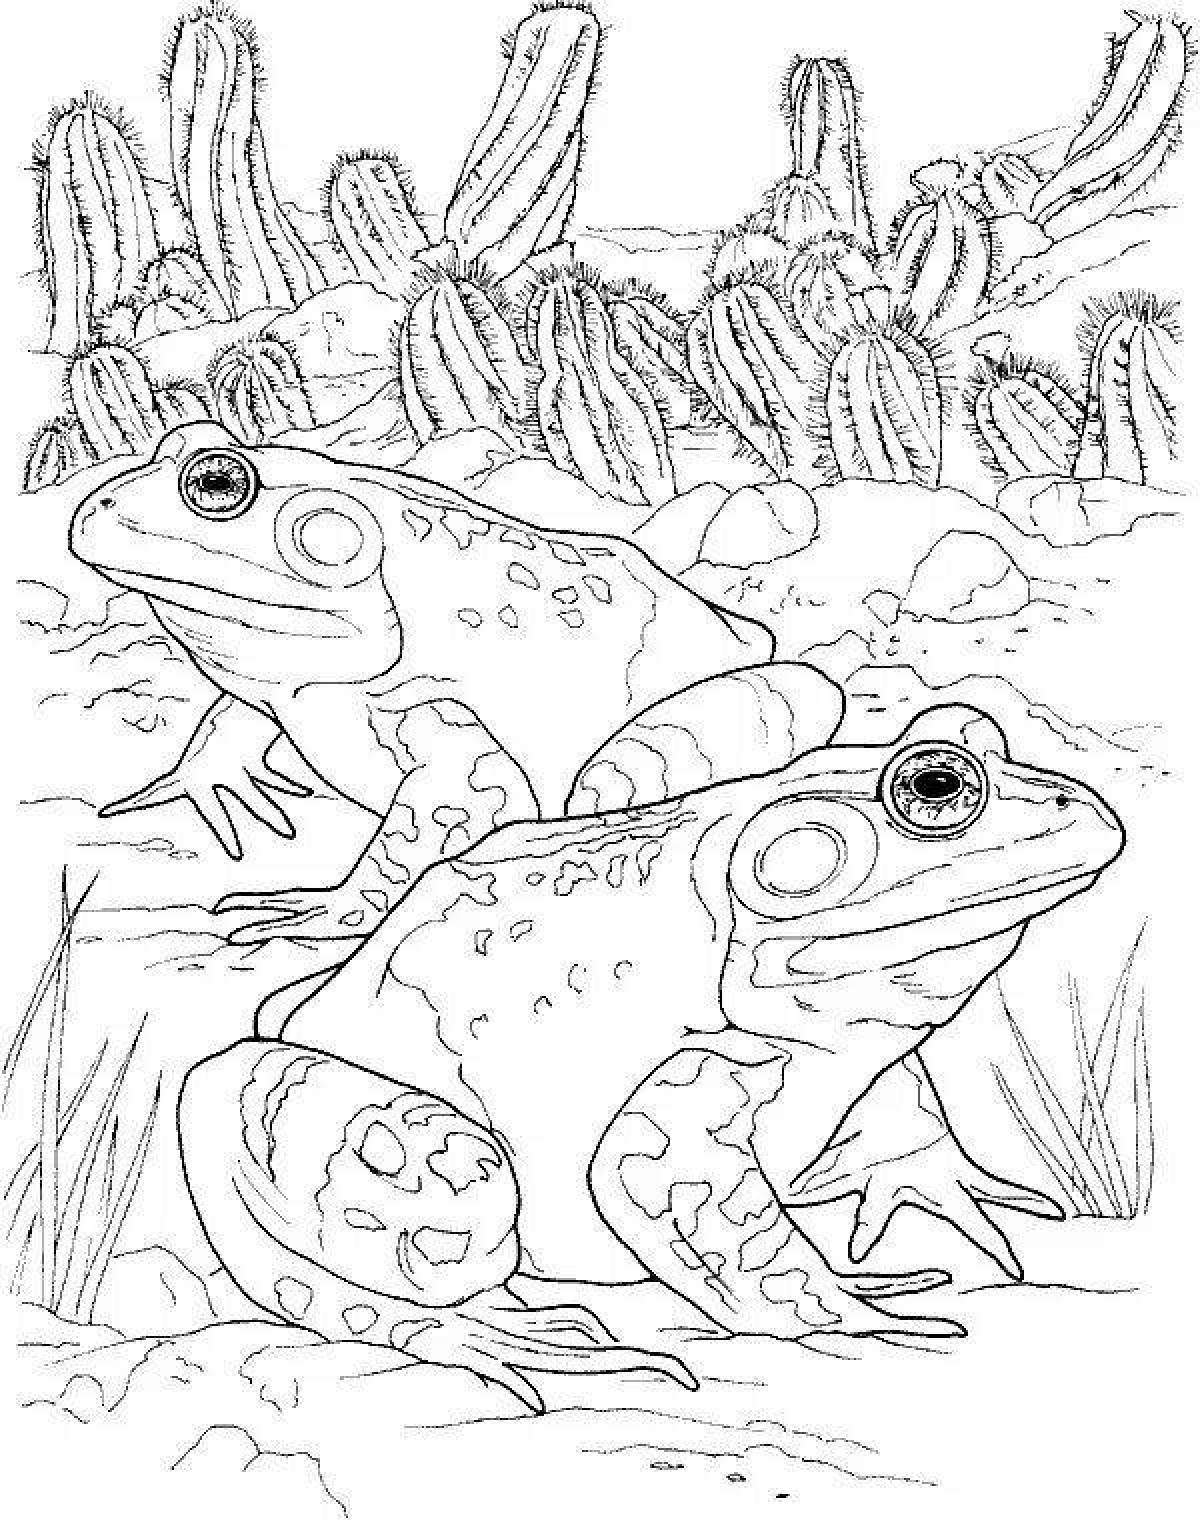 Great amphibian coloring book